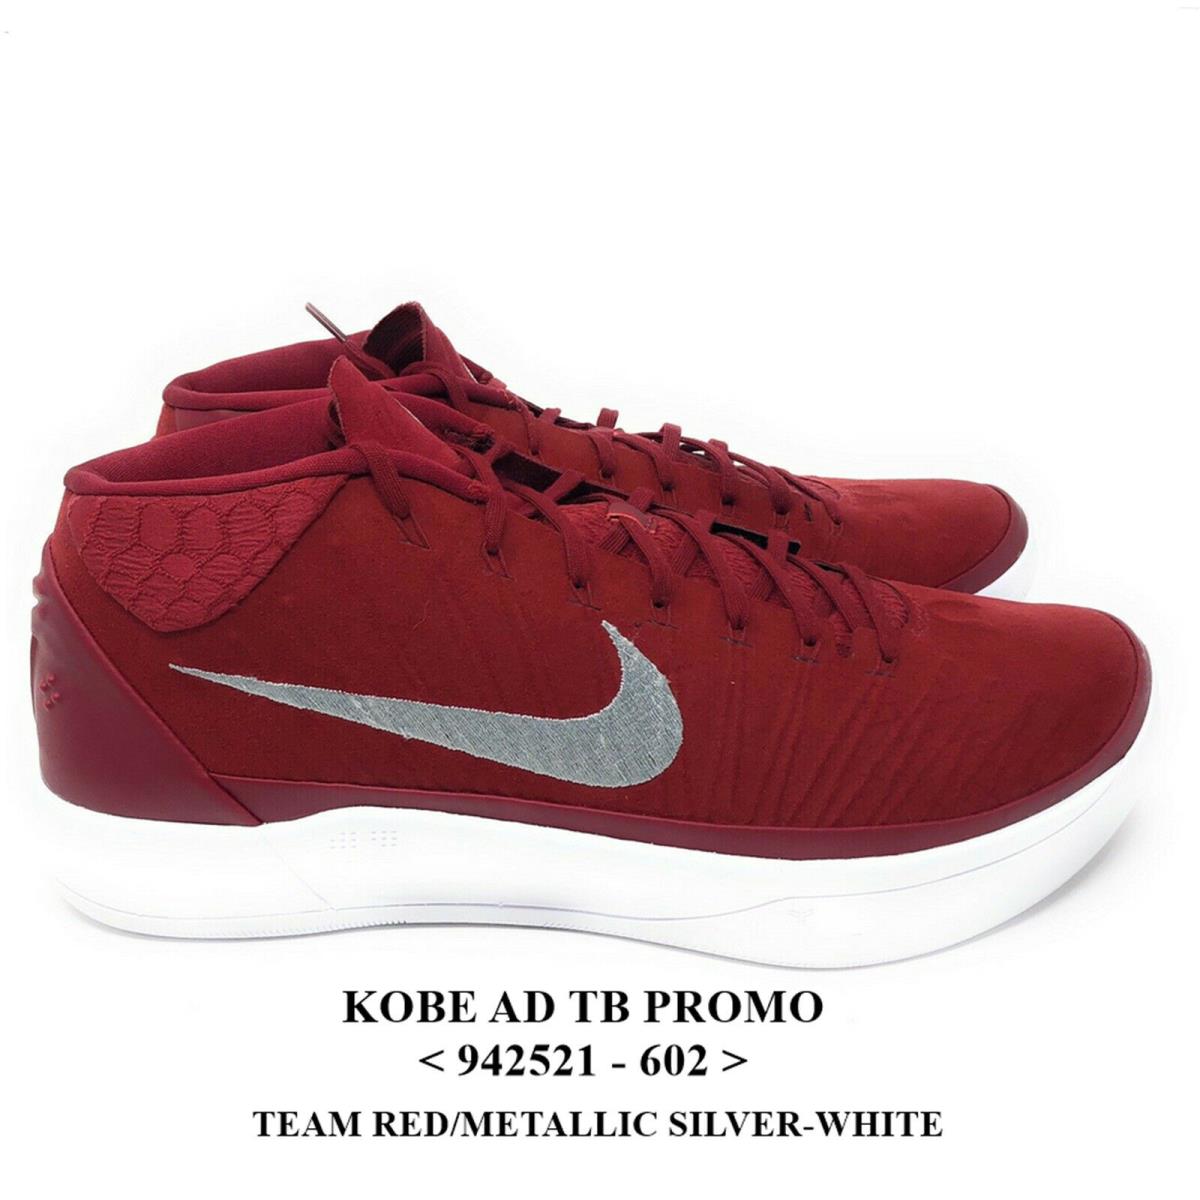 Nike Kobe AD TB Promo <942521 - 602> Men`s Basketball Shoe . NO Lid